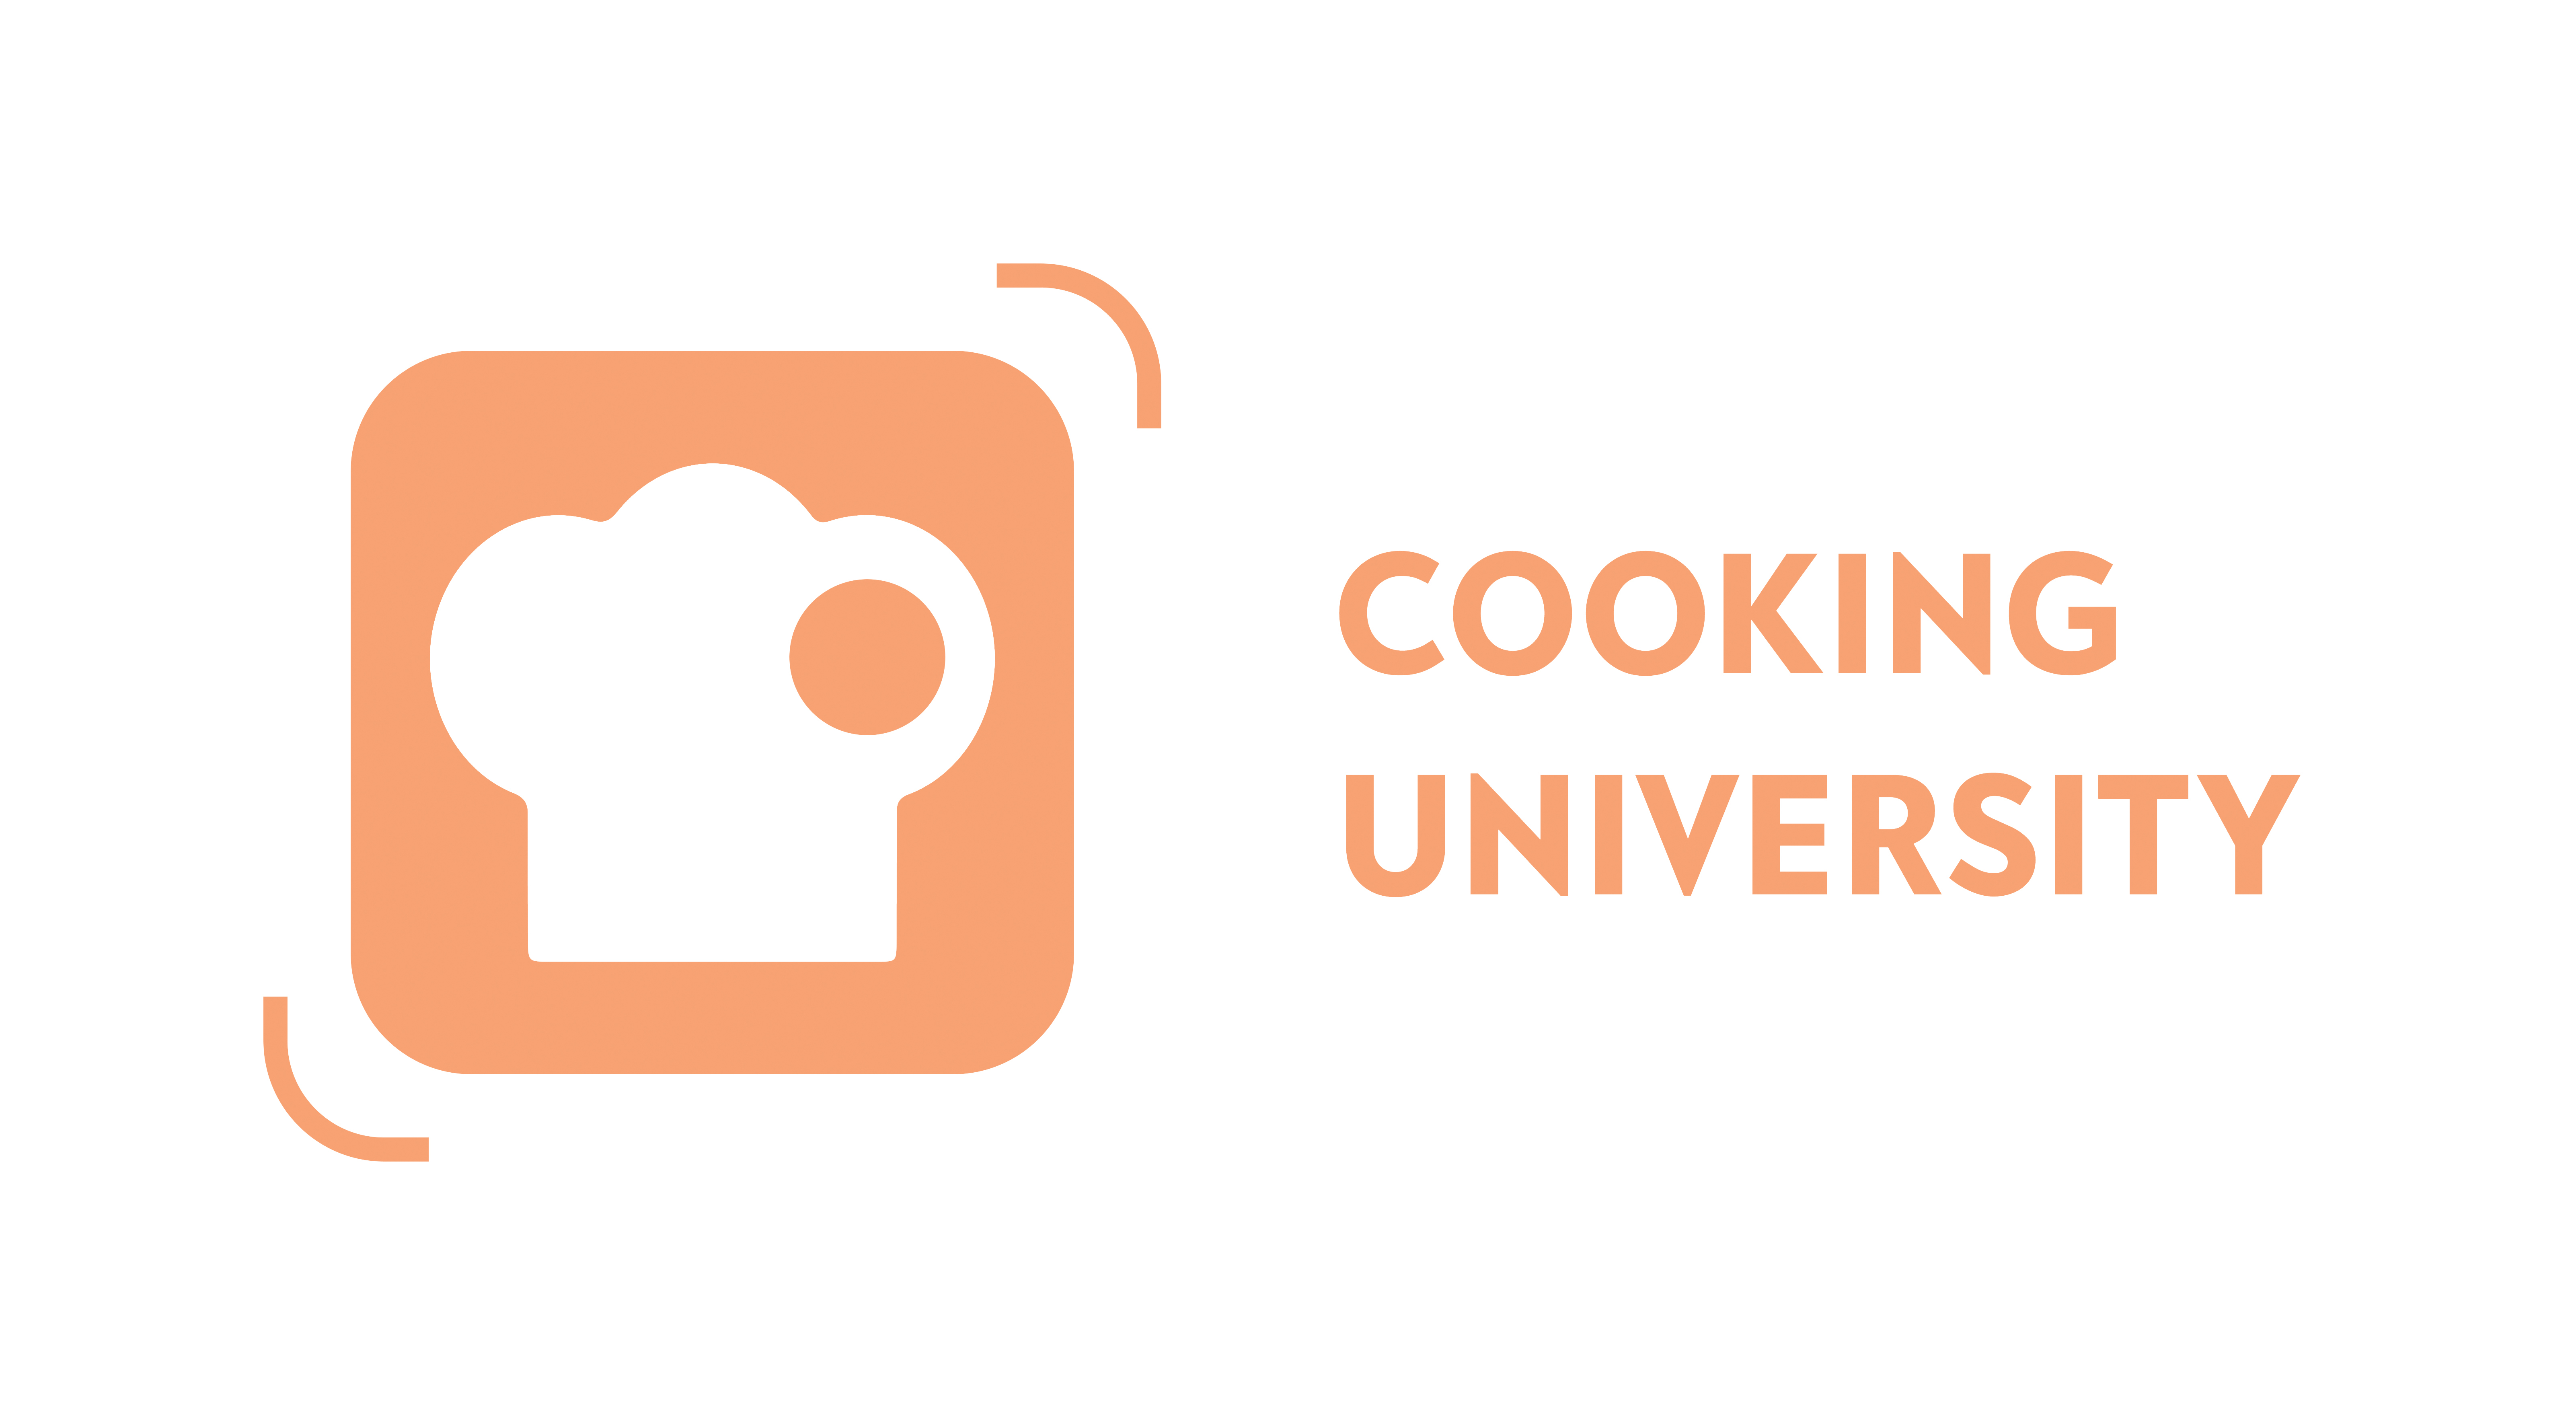 Cooking University